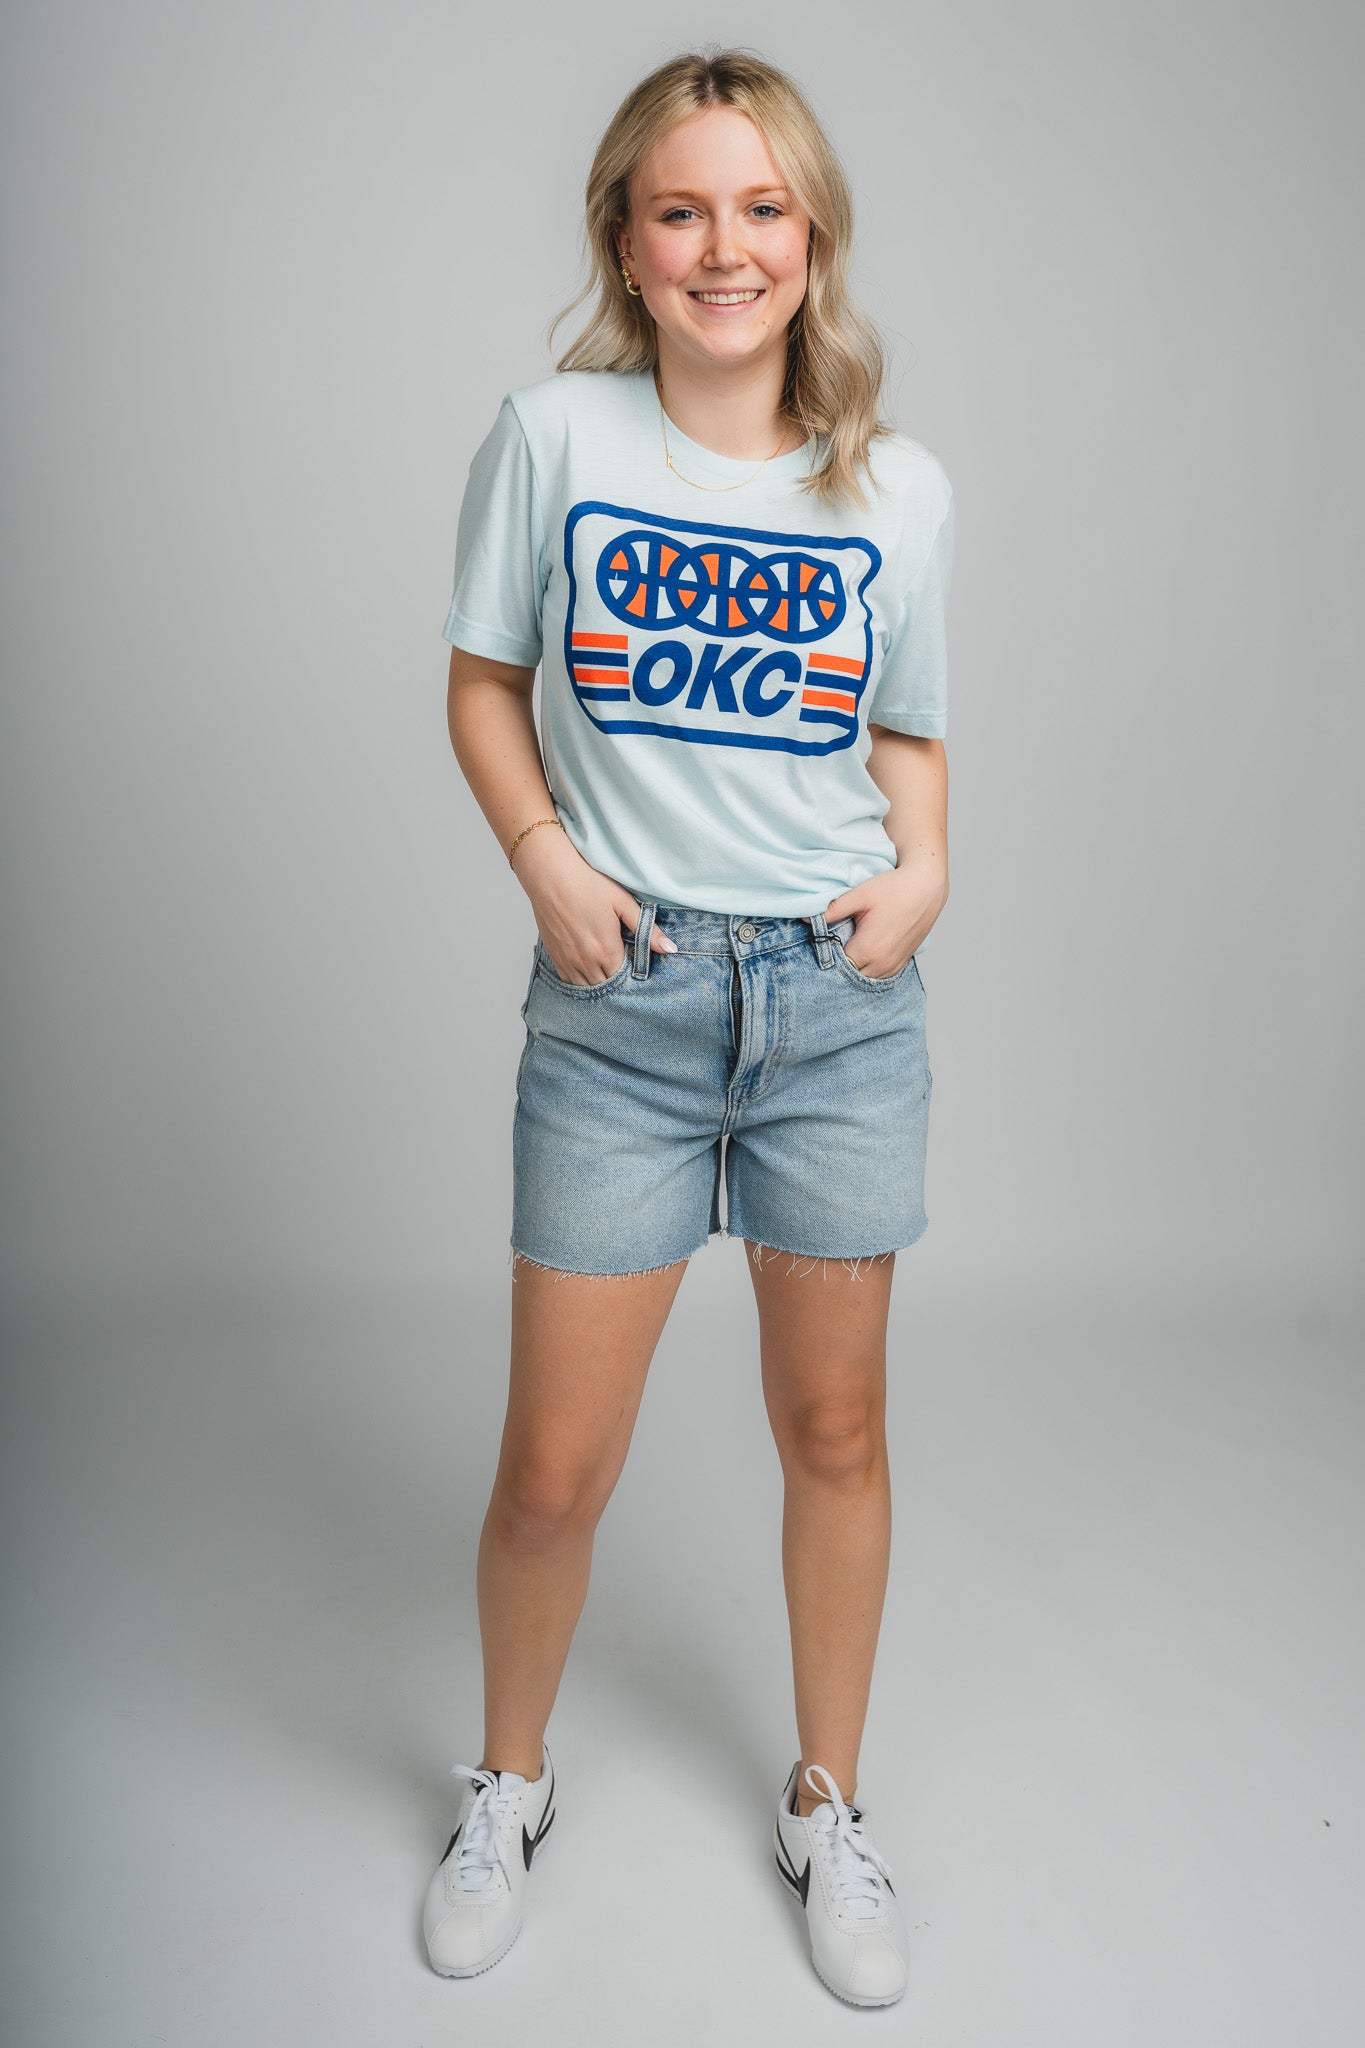 OKC basketball unisex t-shirt 2305 - Oklahoma City inspired graphic t-shirts at Lush Fashion Lounge Boutique in Oklahoma City